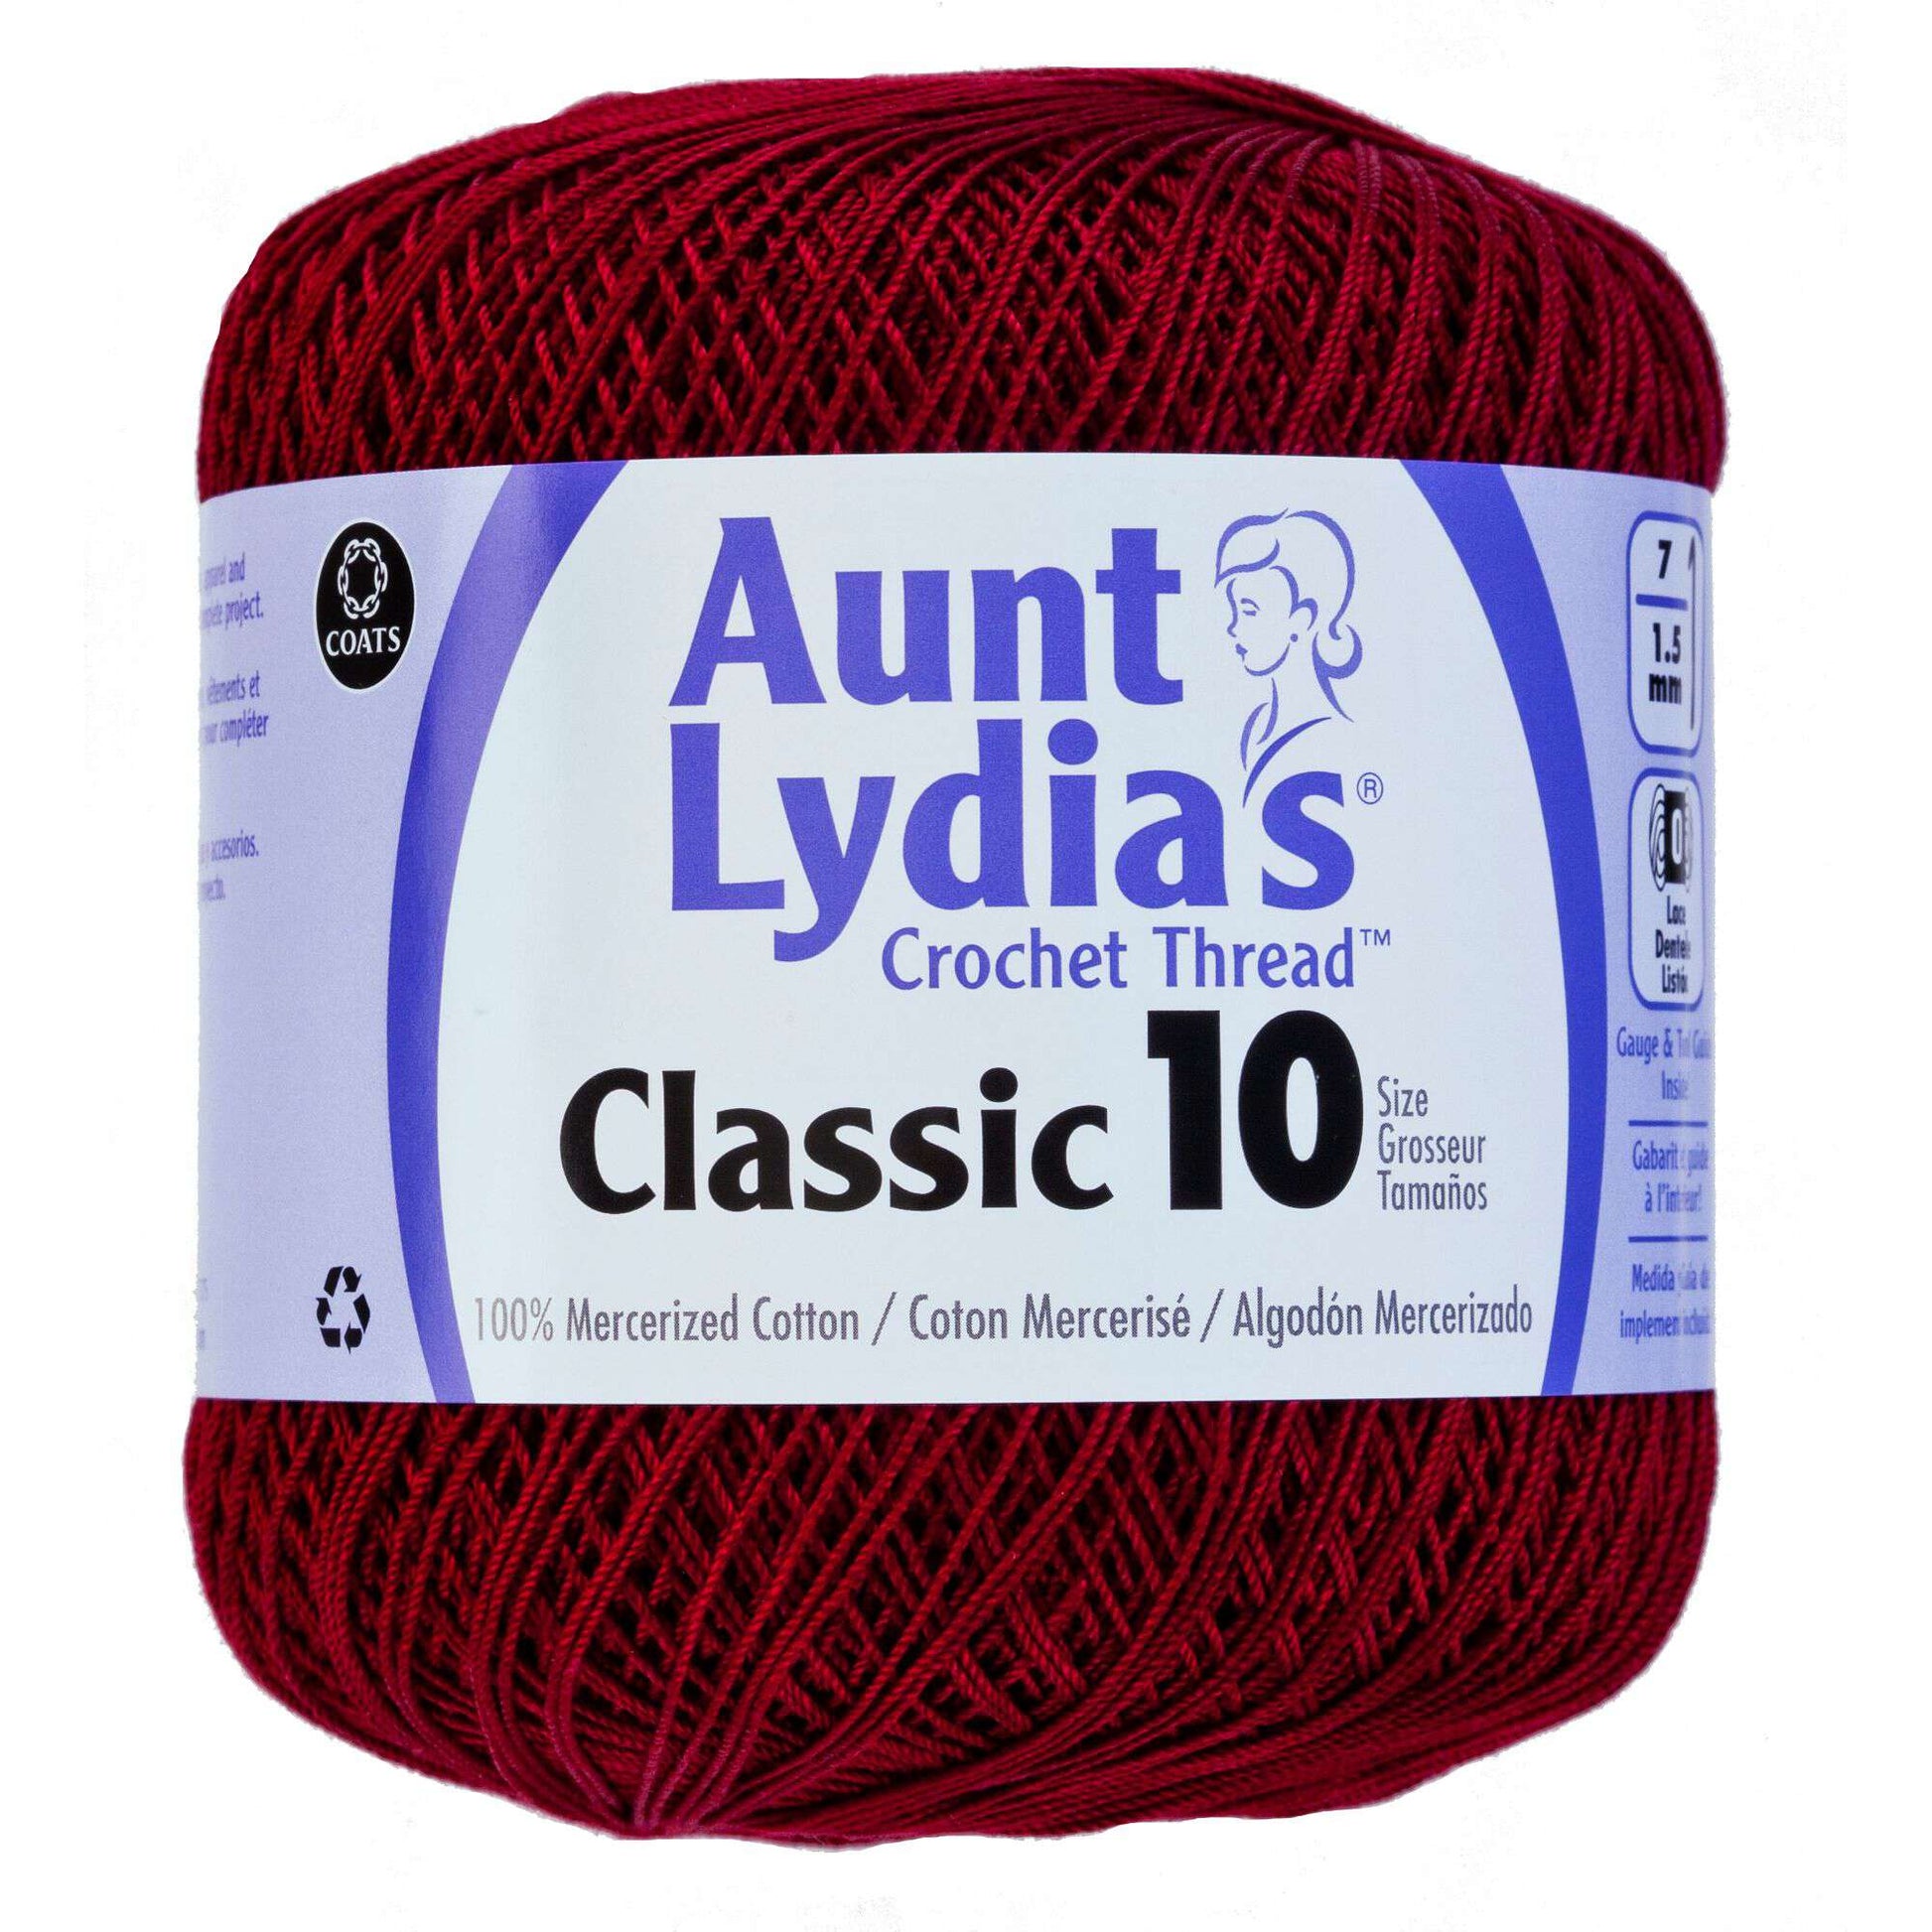 Aunt Lydia's Classic Crochet Thread Size 10 - Clearance shades Burgundy